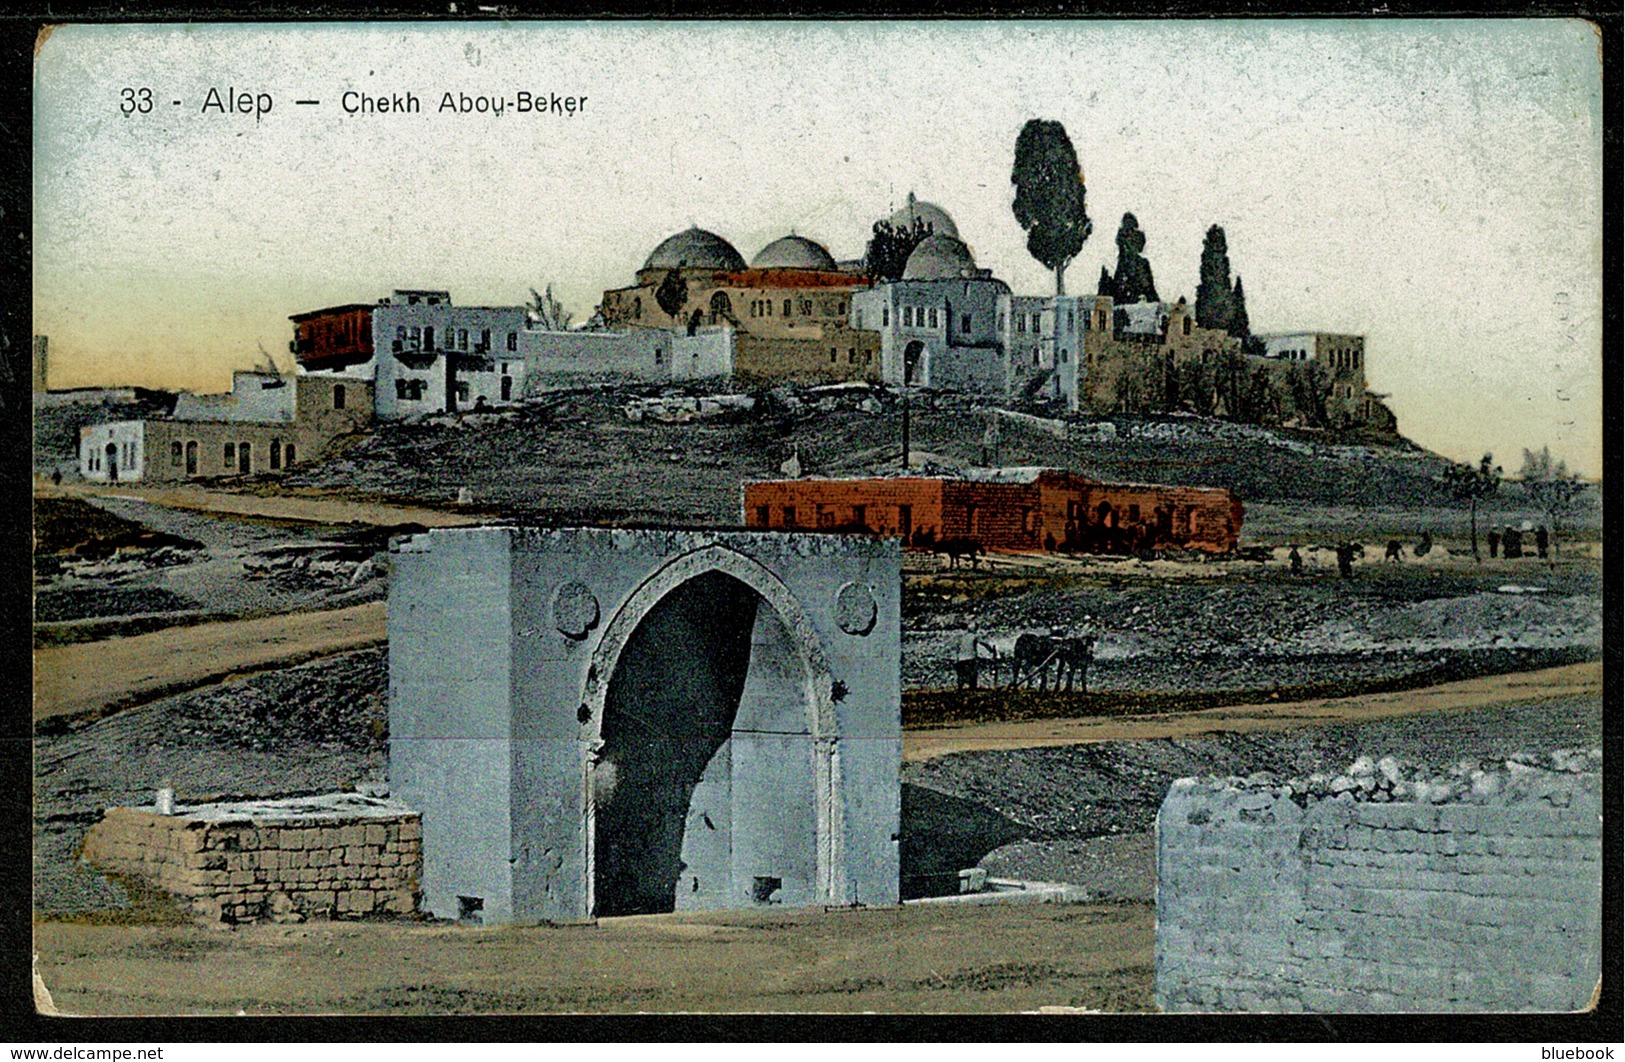 Ref 1322 - Early Postcard - Chekh Abou-Beker Alep - Aleppo Syria - Middle East - Syria